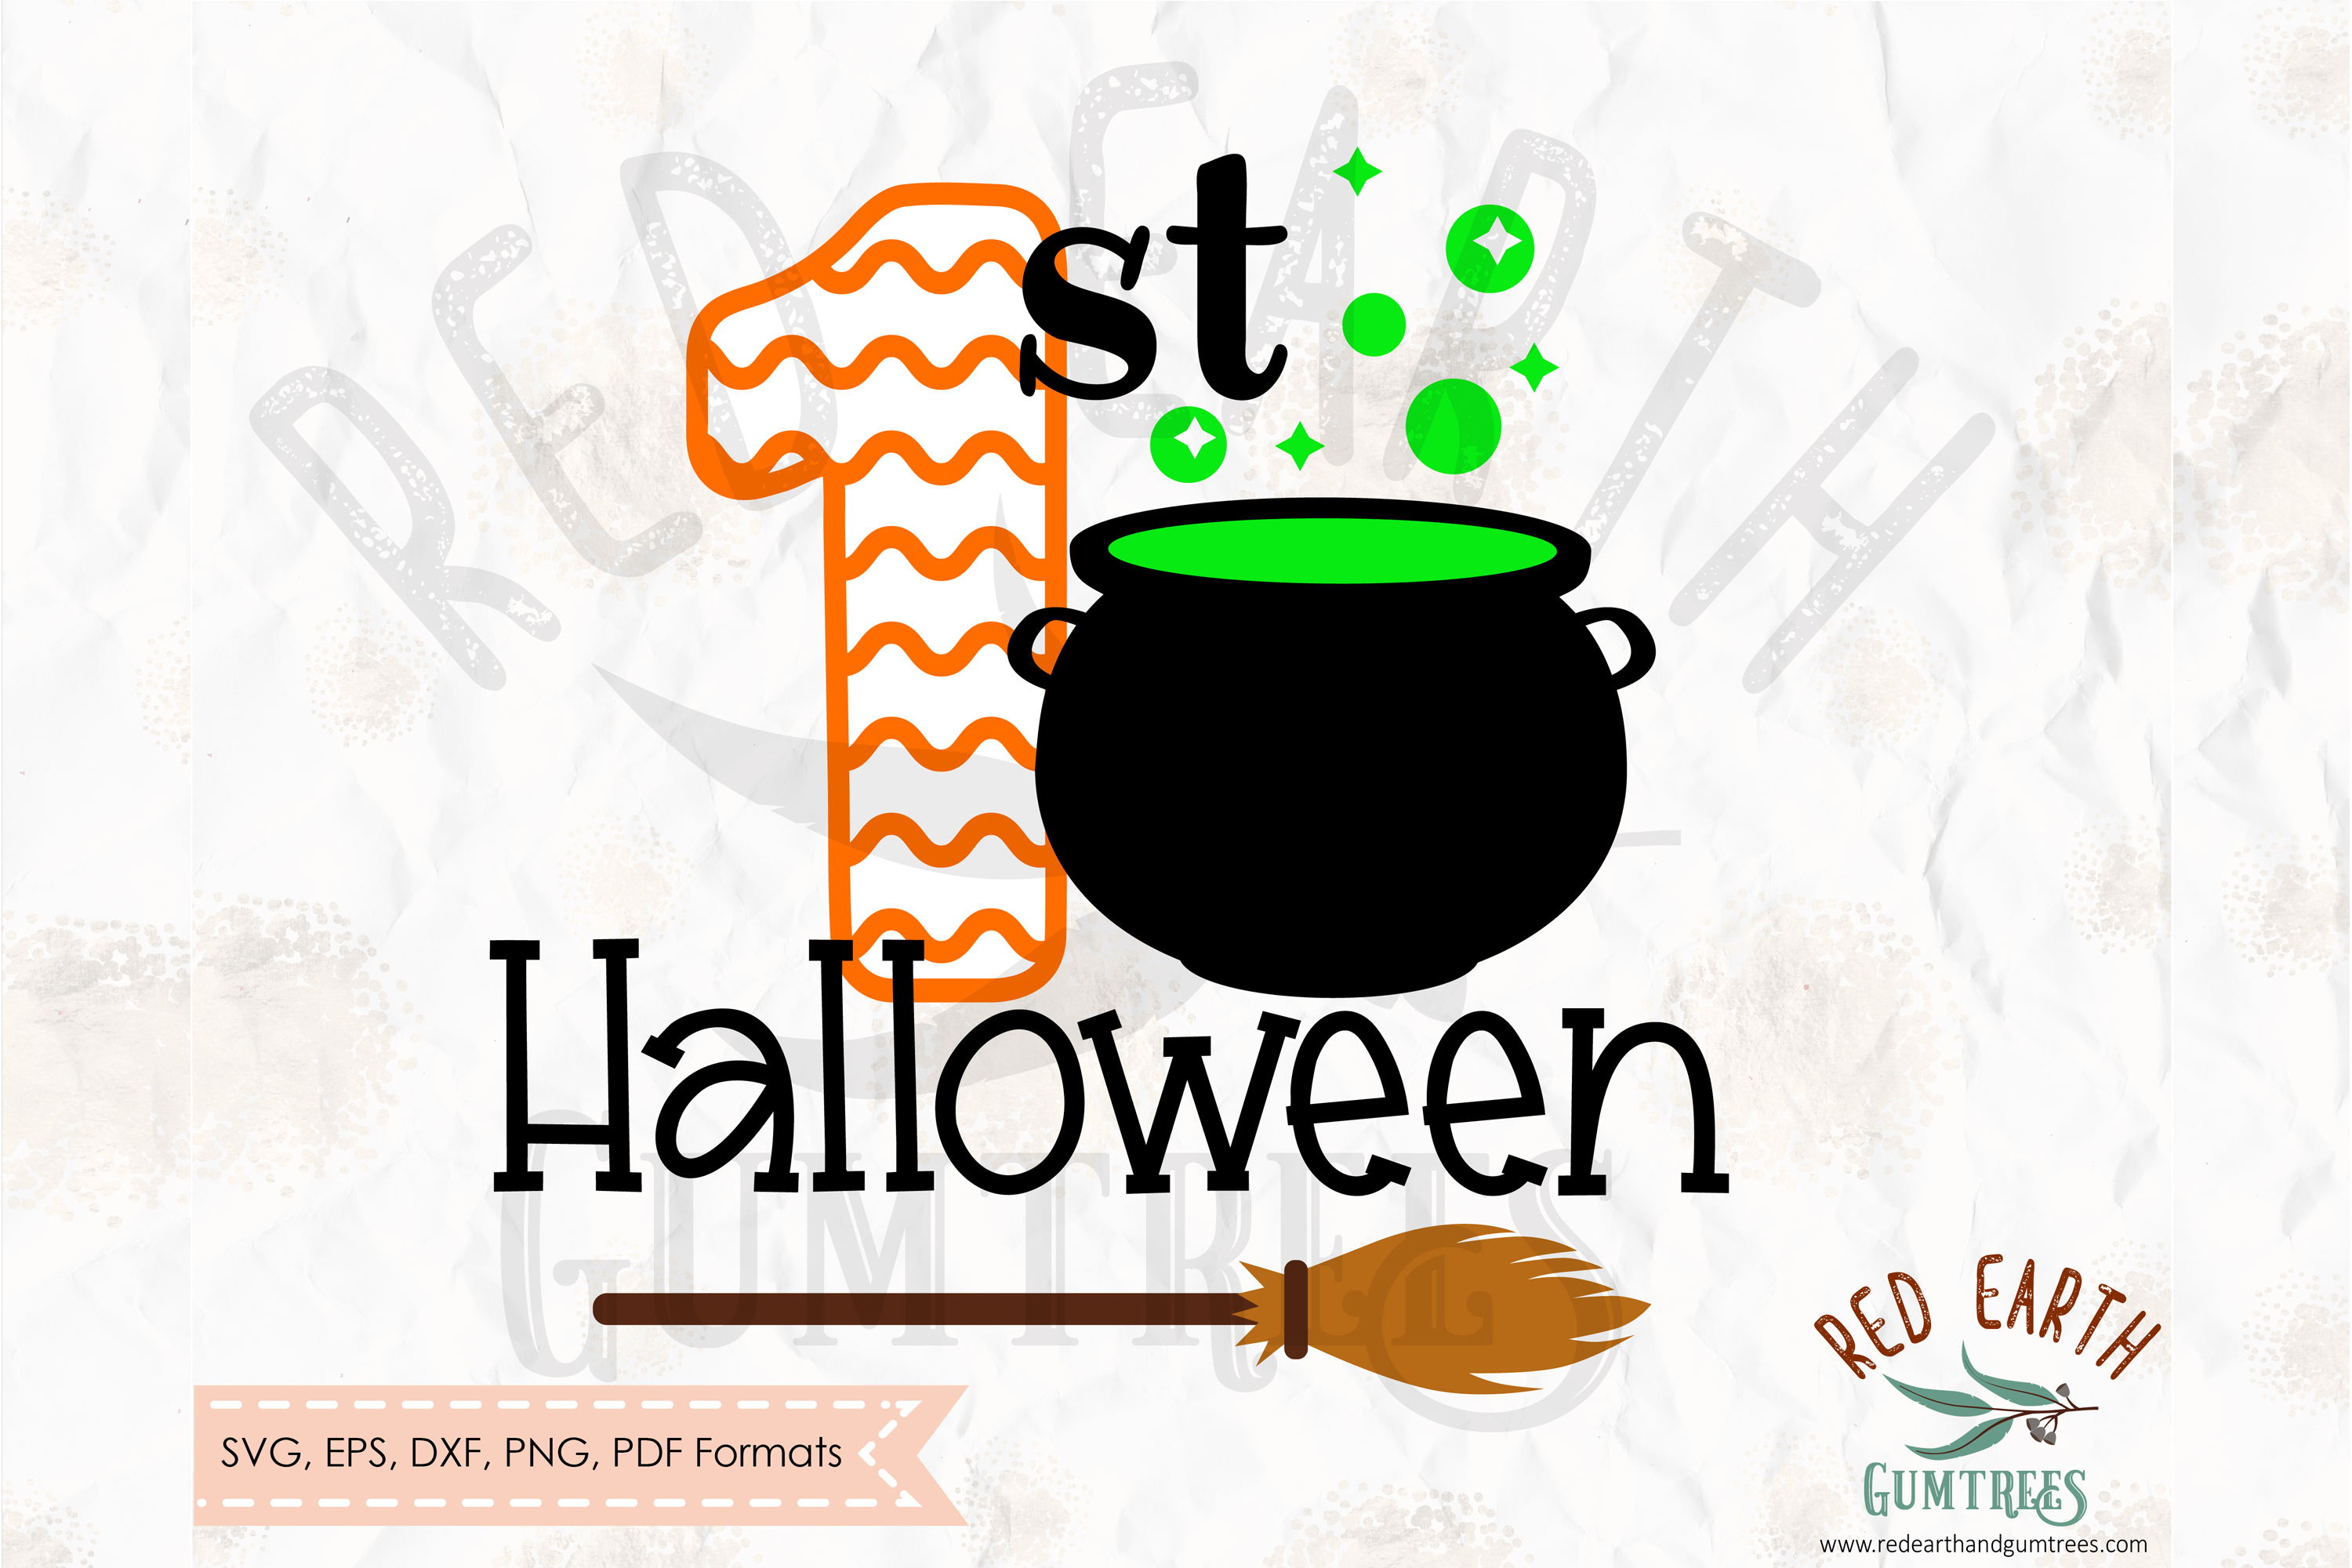 Download First little baby Halloween, 1st little baby Halloween SVG ...